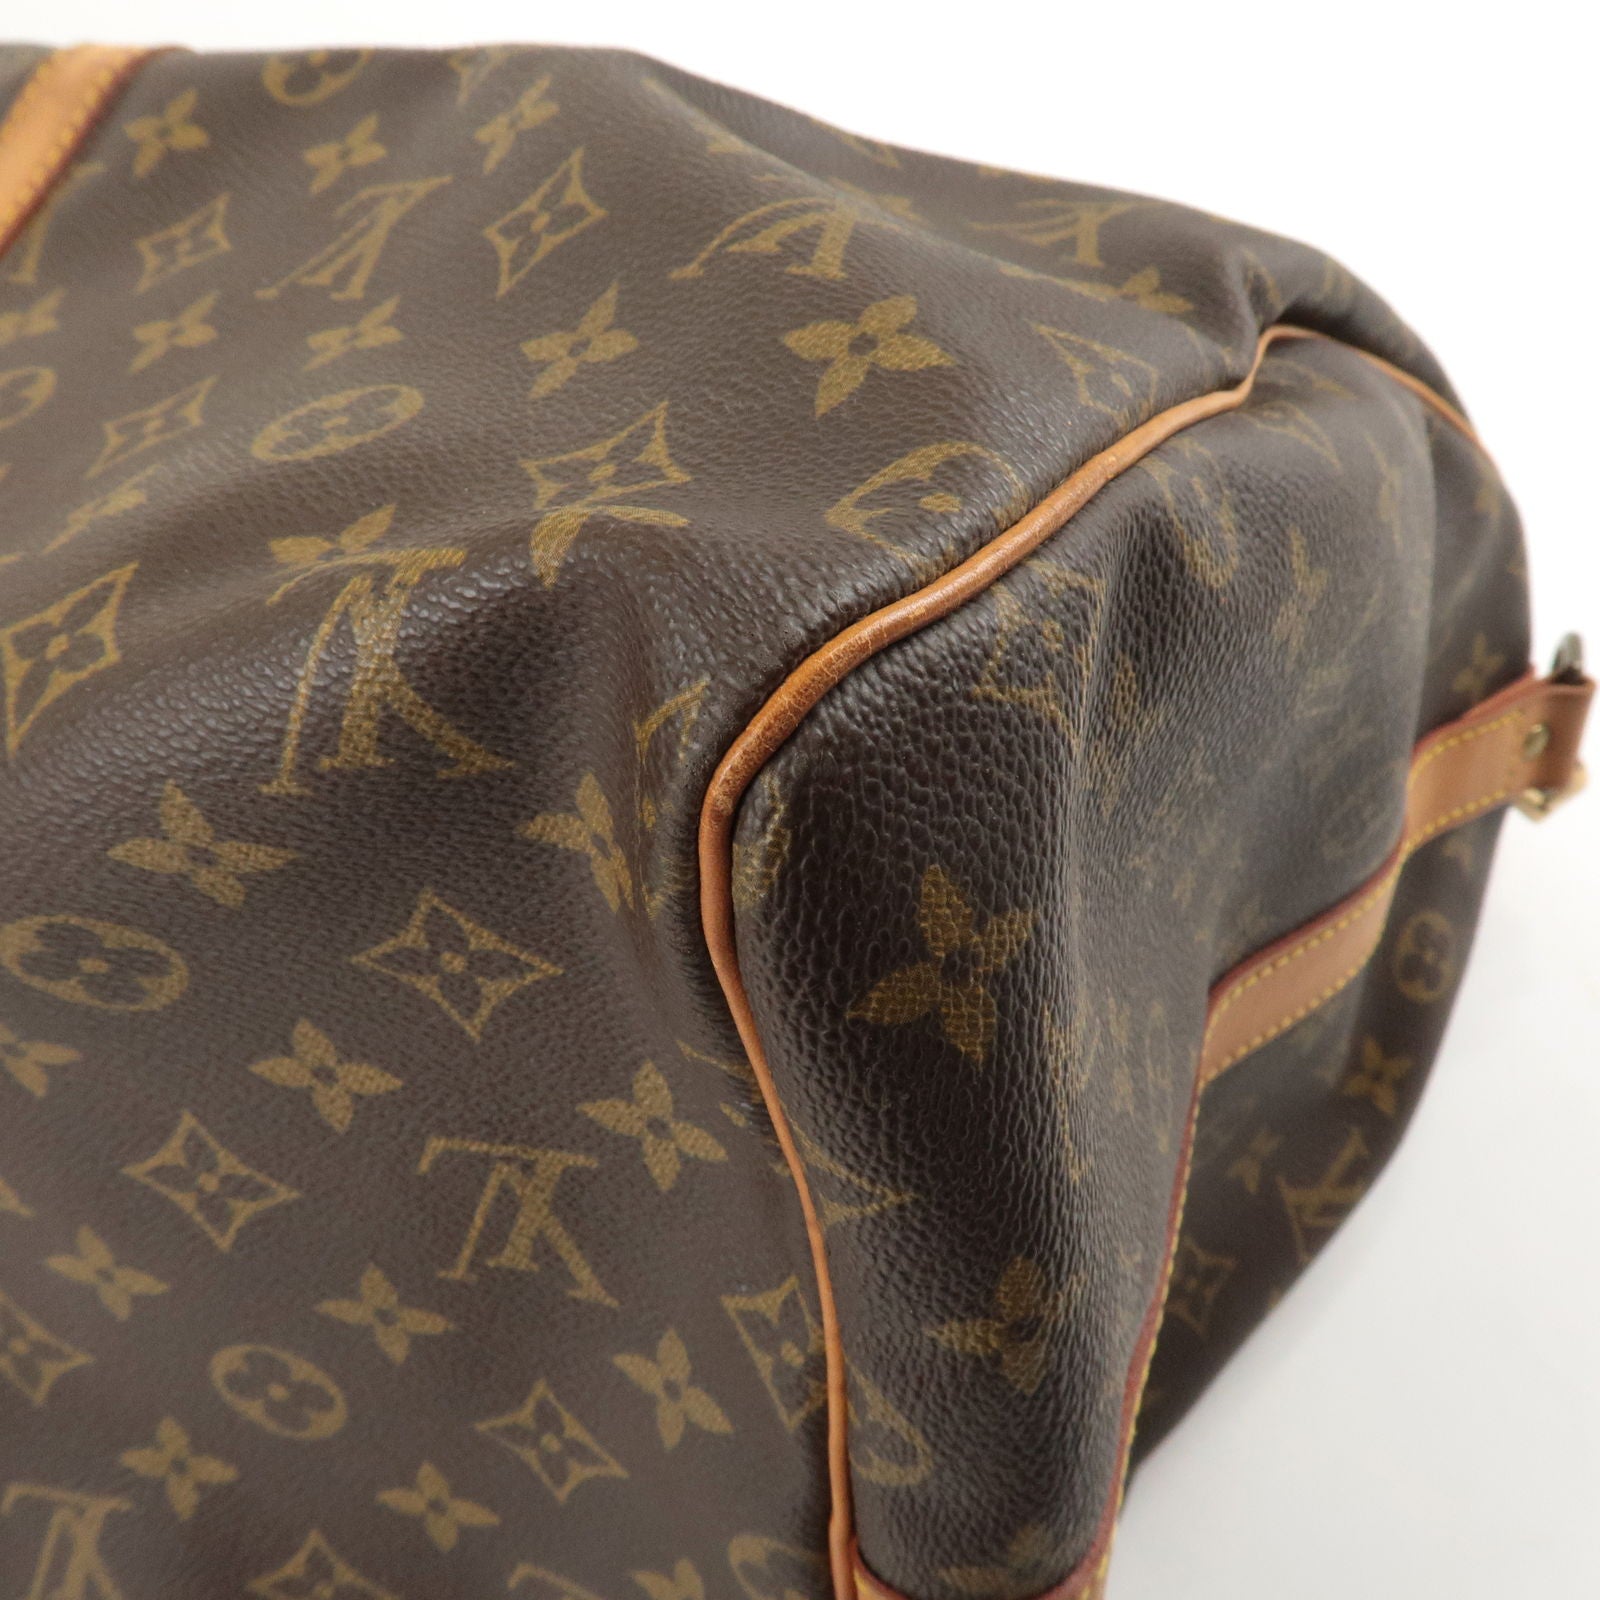 Louis Vuitton Jasmine Boston Bag